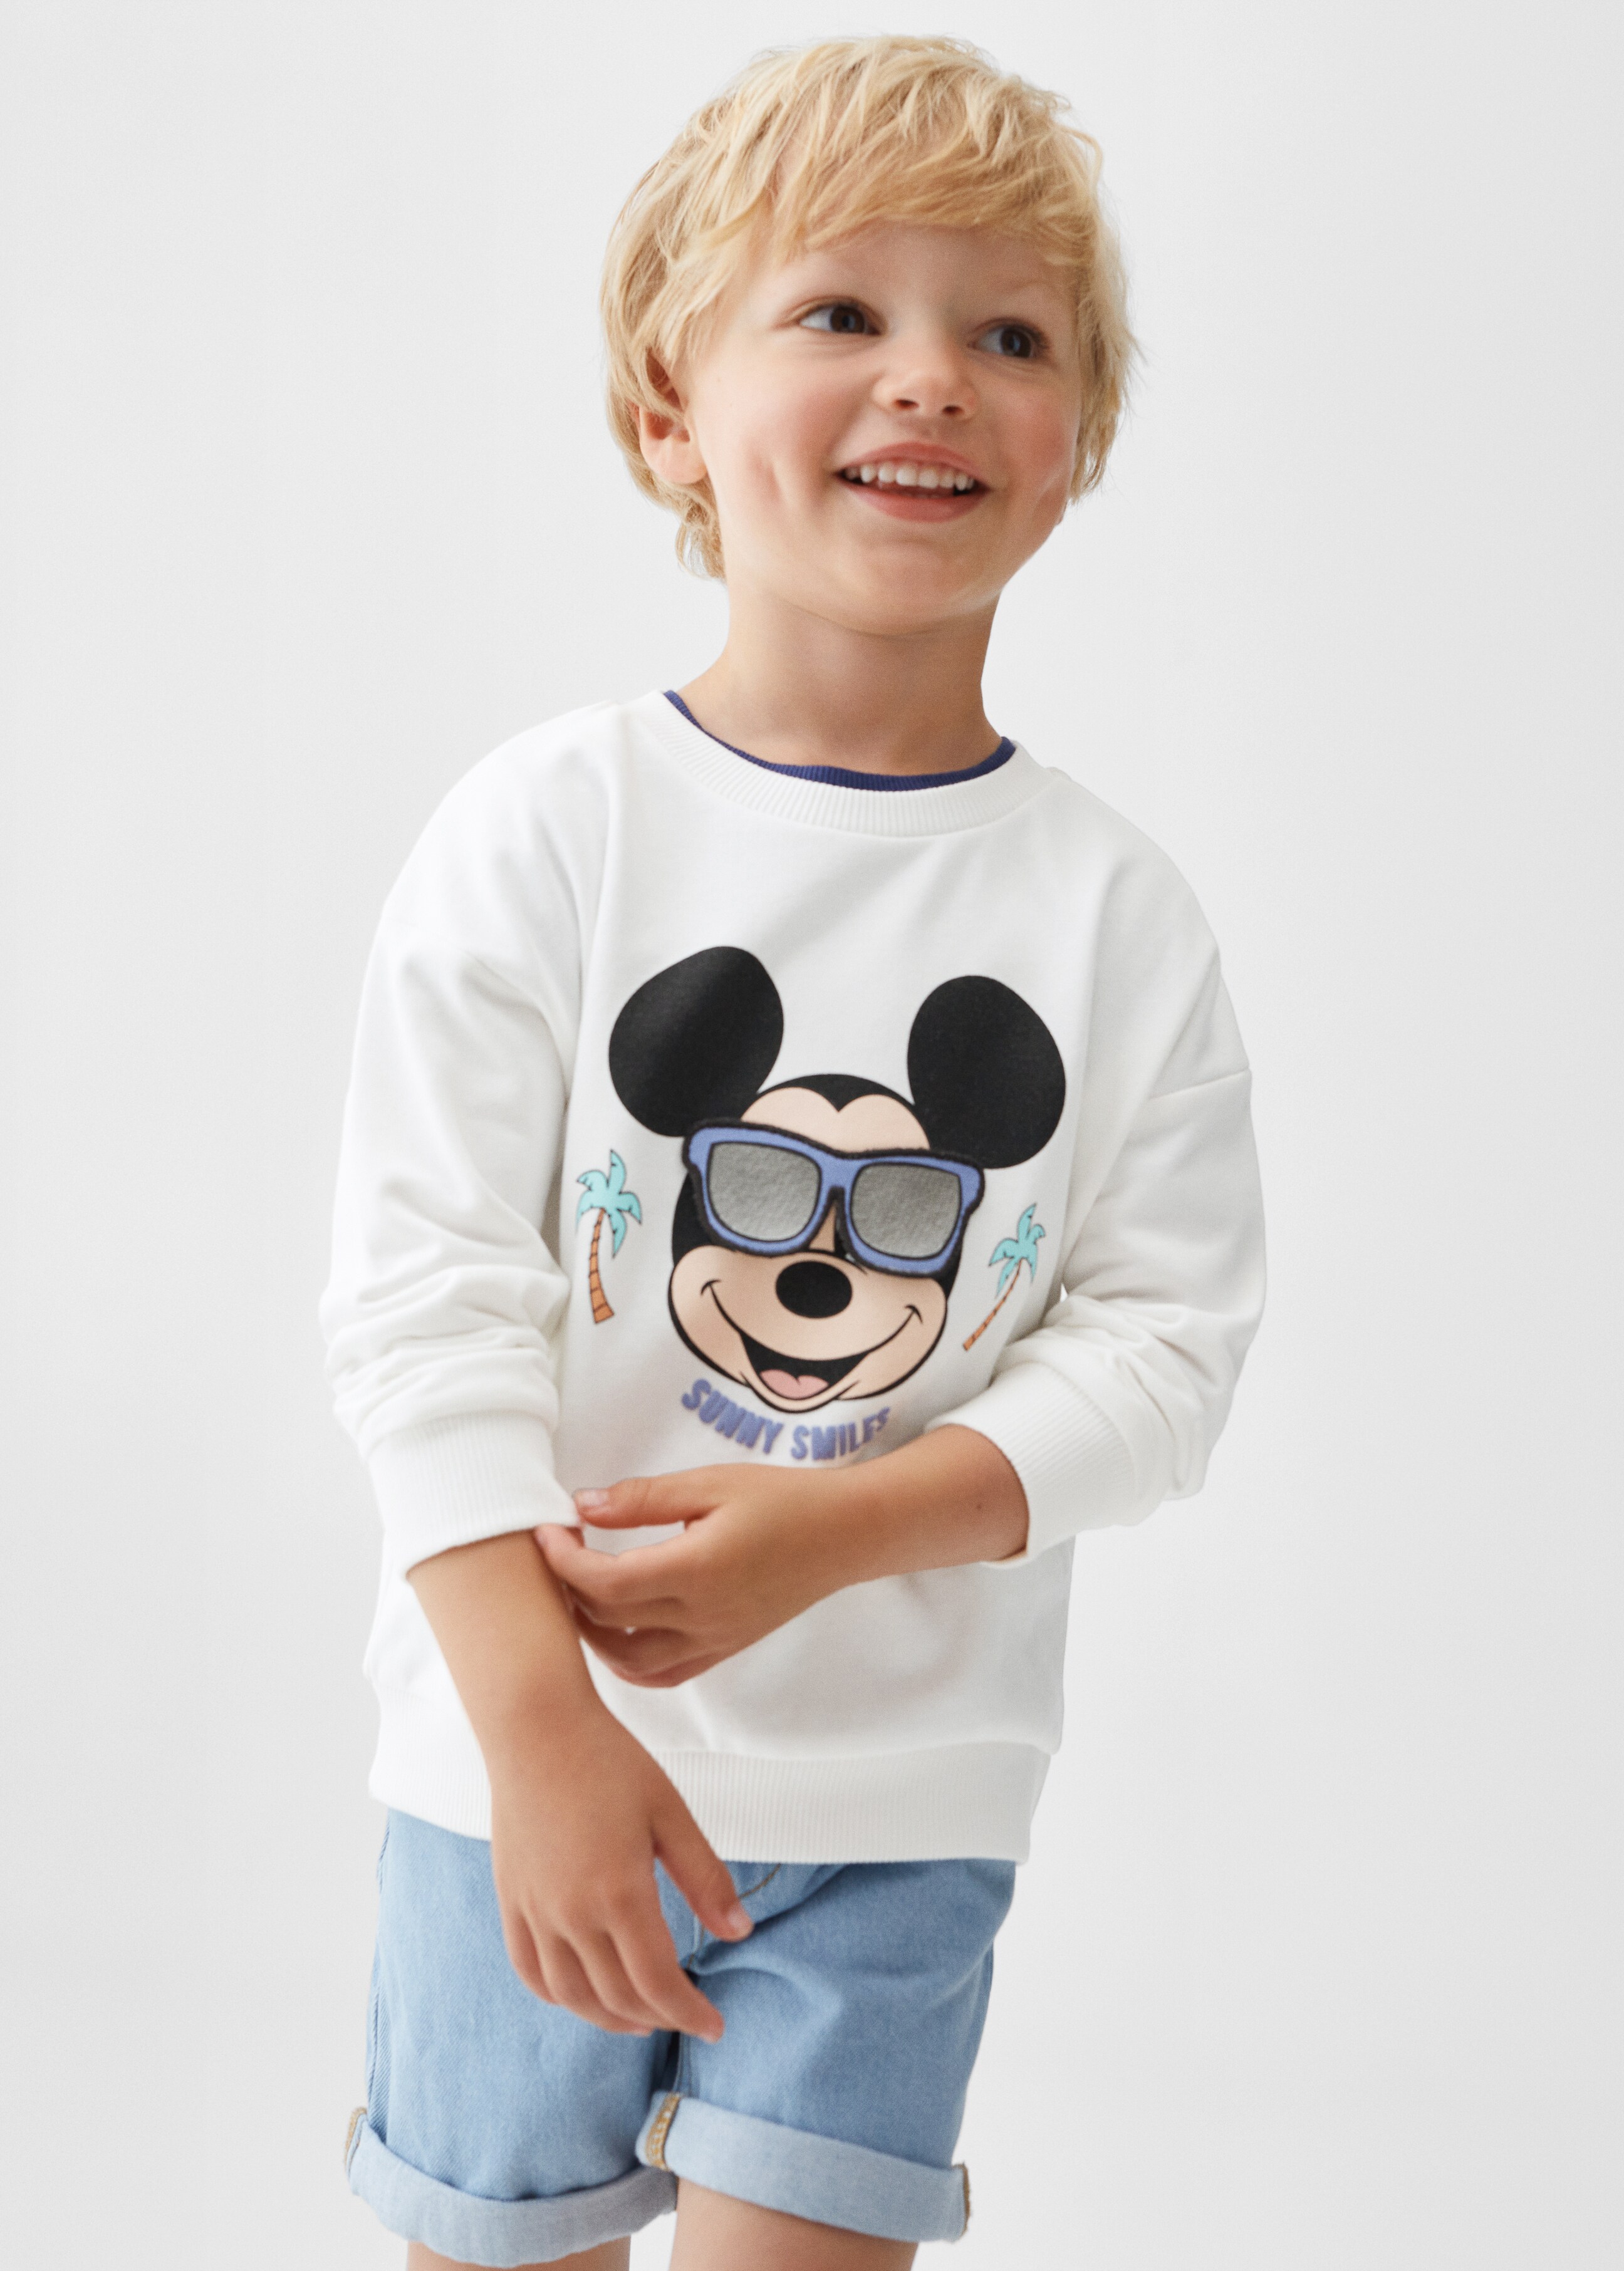 Mickey Mouse sweatshirt - Medium plane